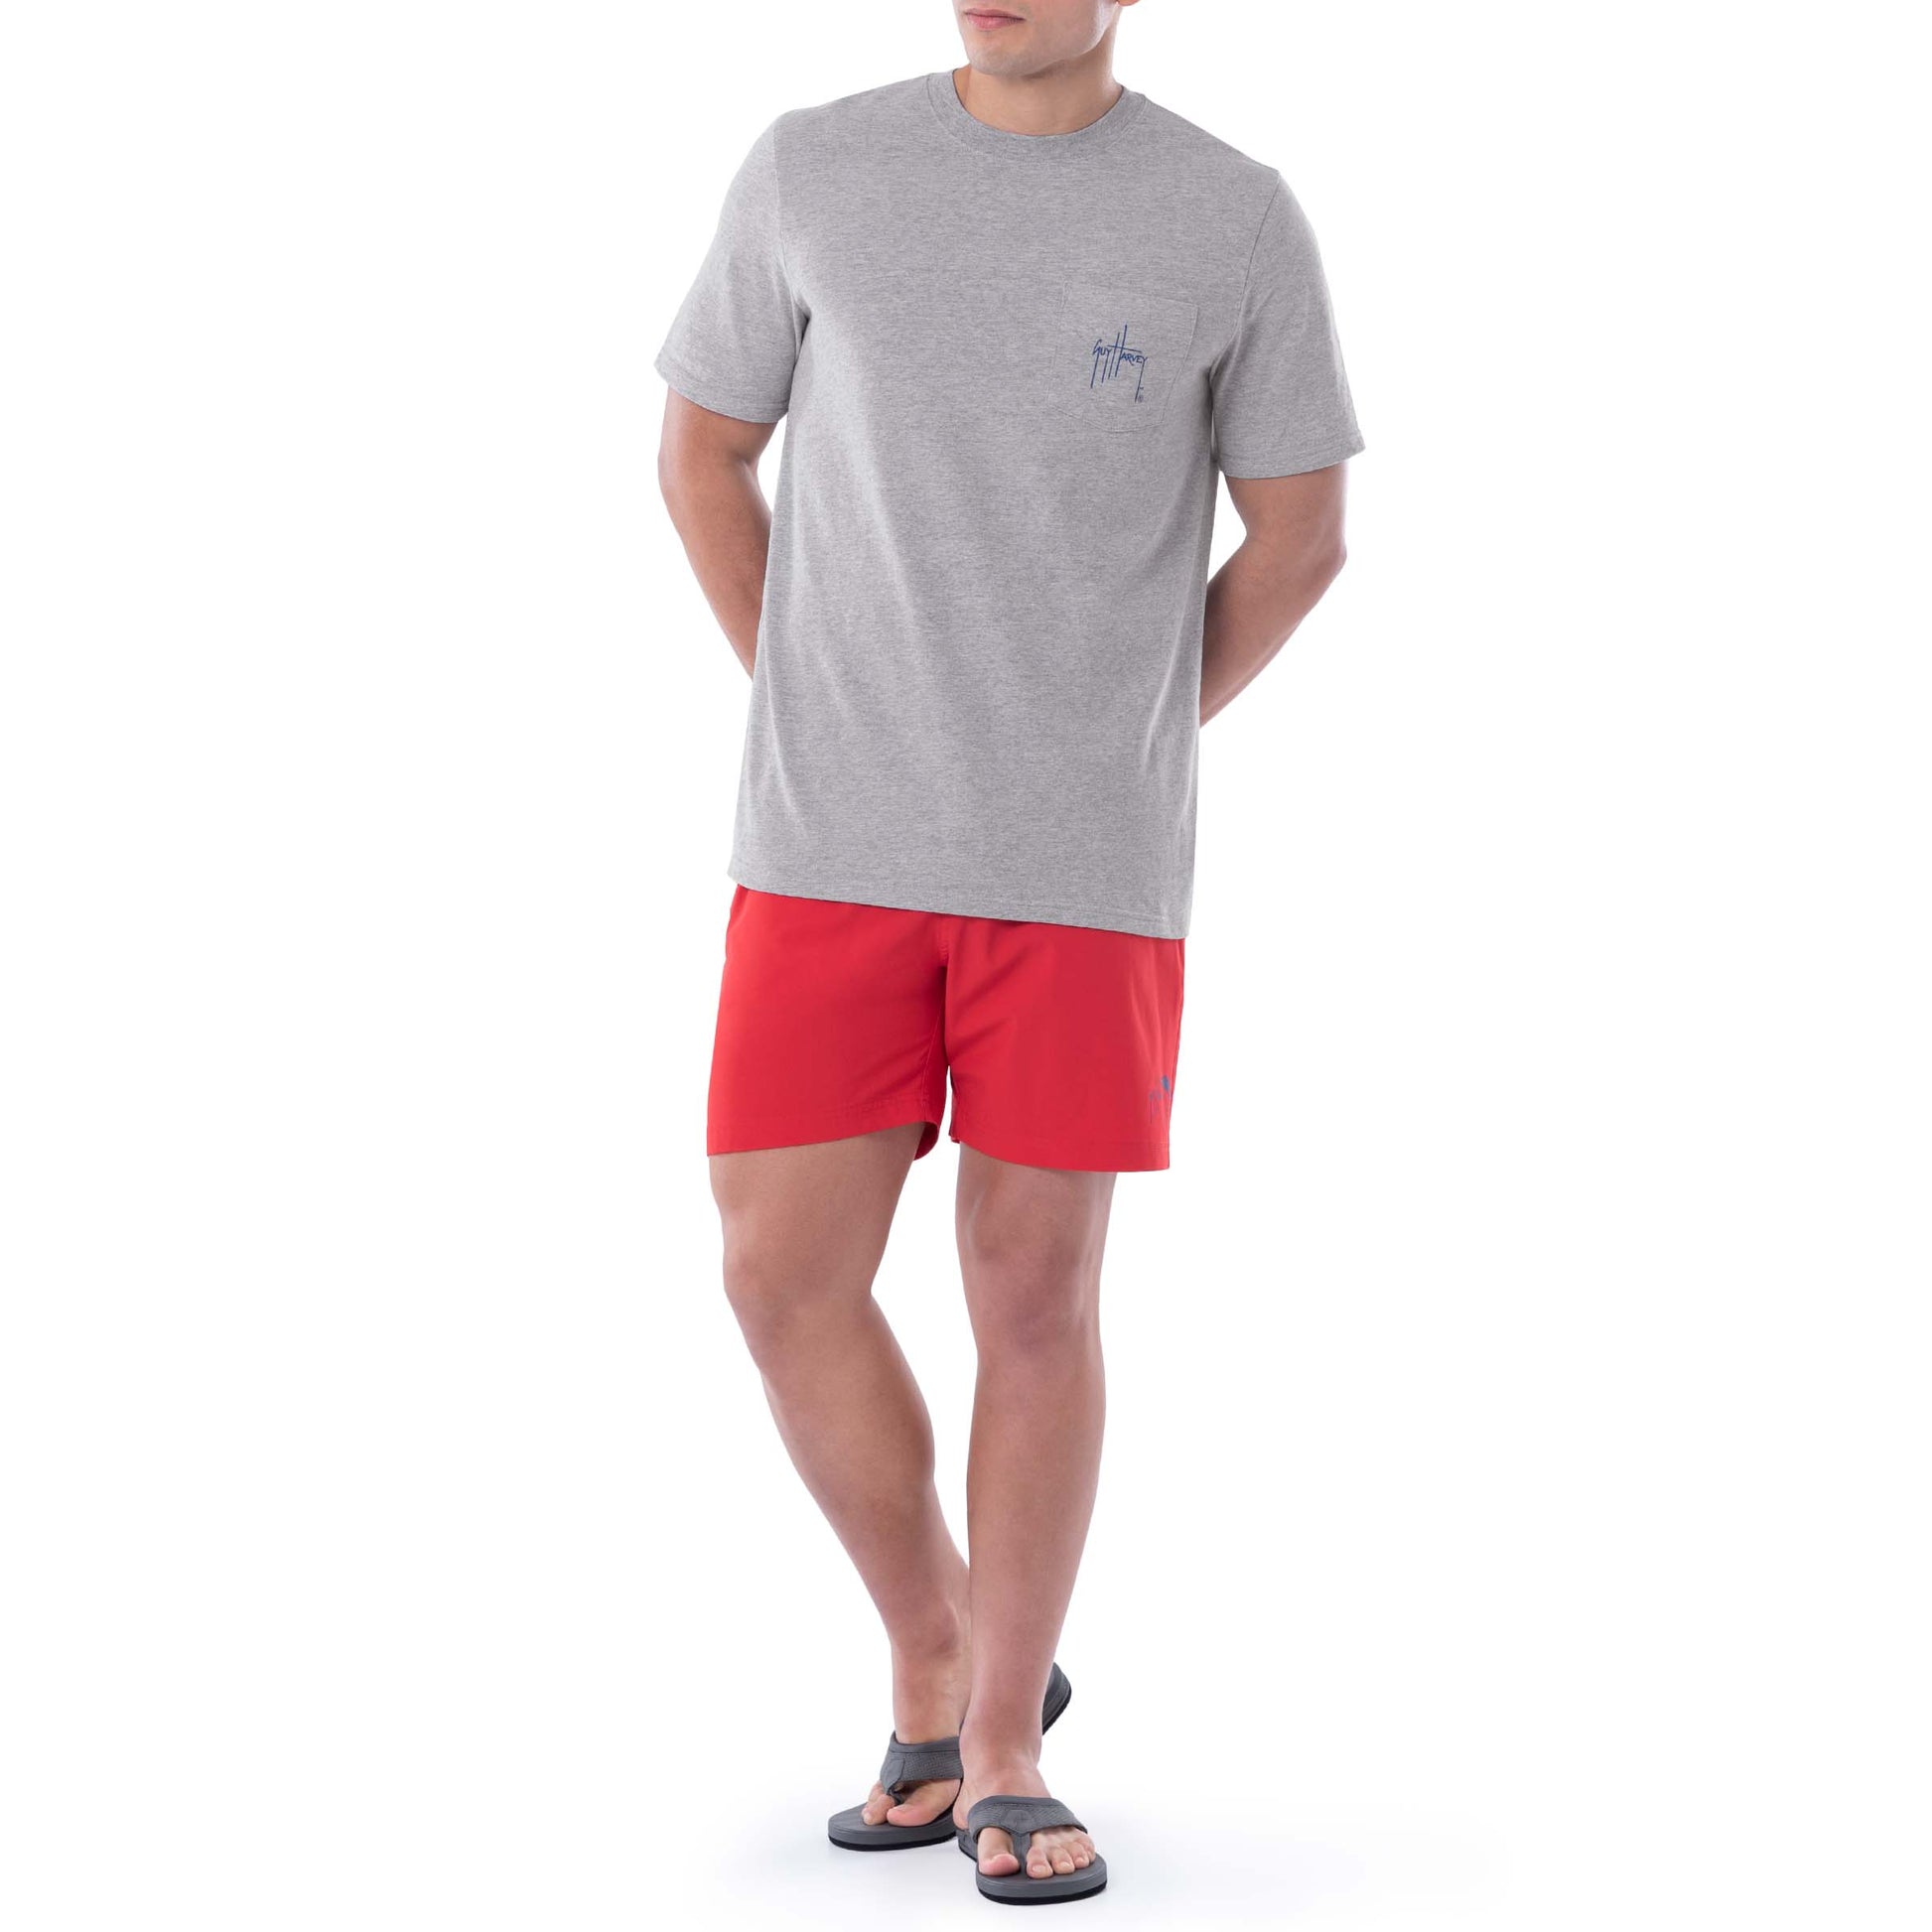 Men's The Flats Short Sleeve Pocket T-Shirt View 6